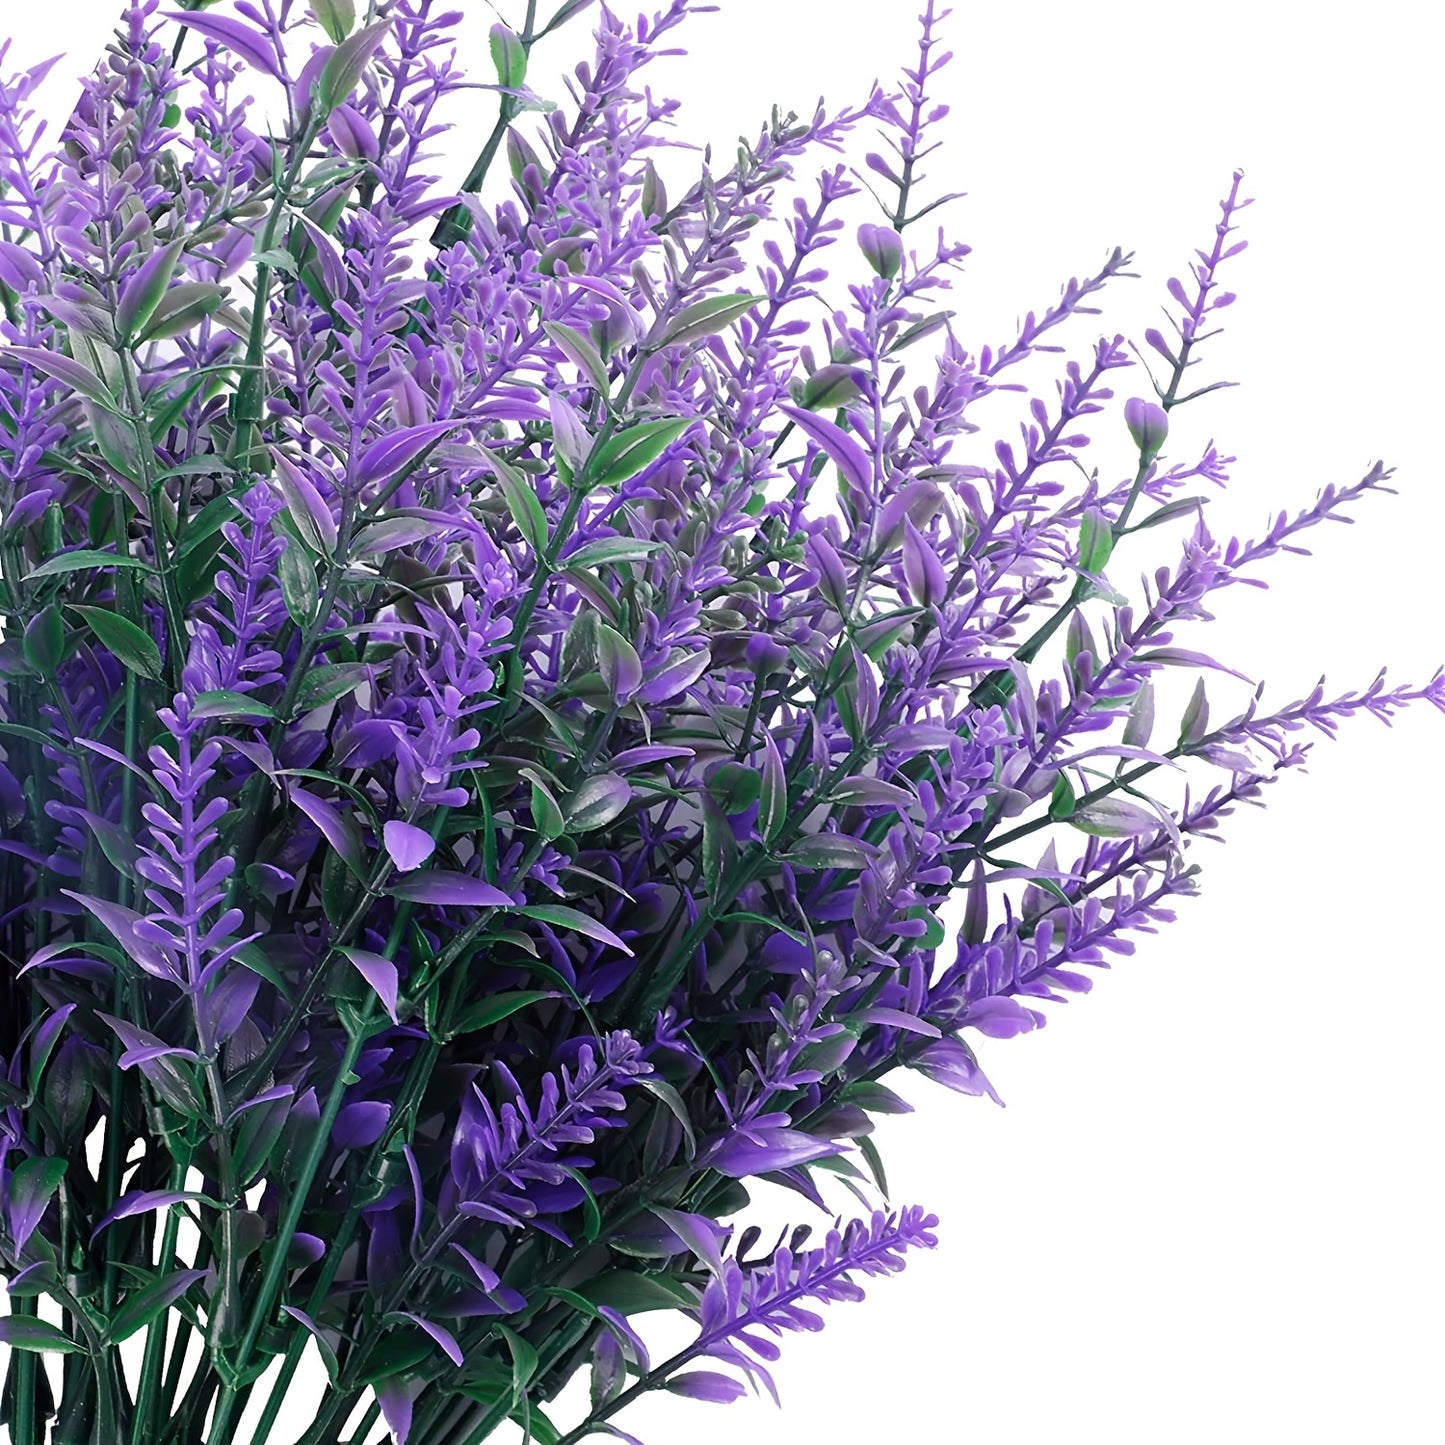 1pc Plastic Lavender, Fake Flower, Artificial Flower, Artificial Lavender, Home Decor